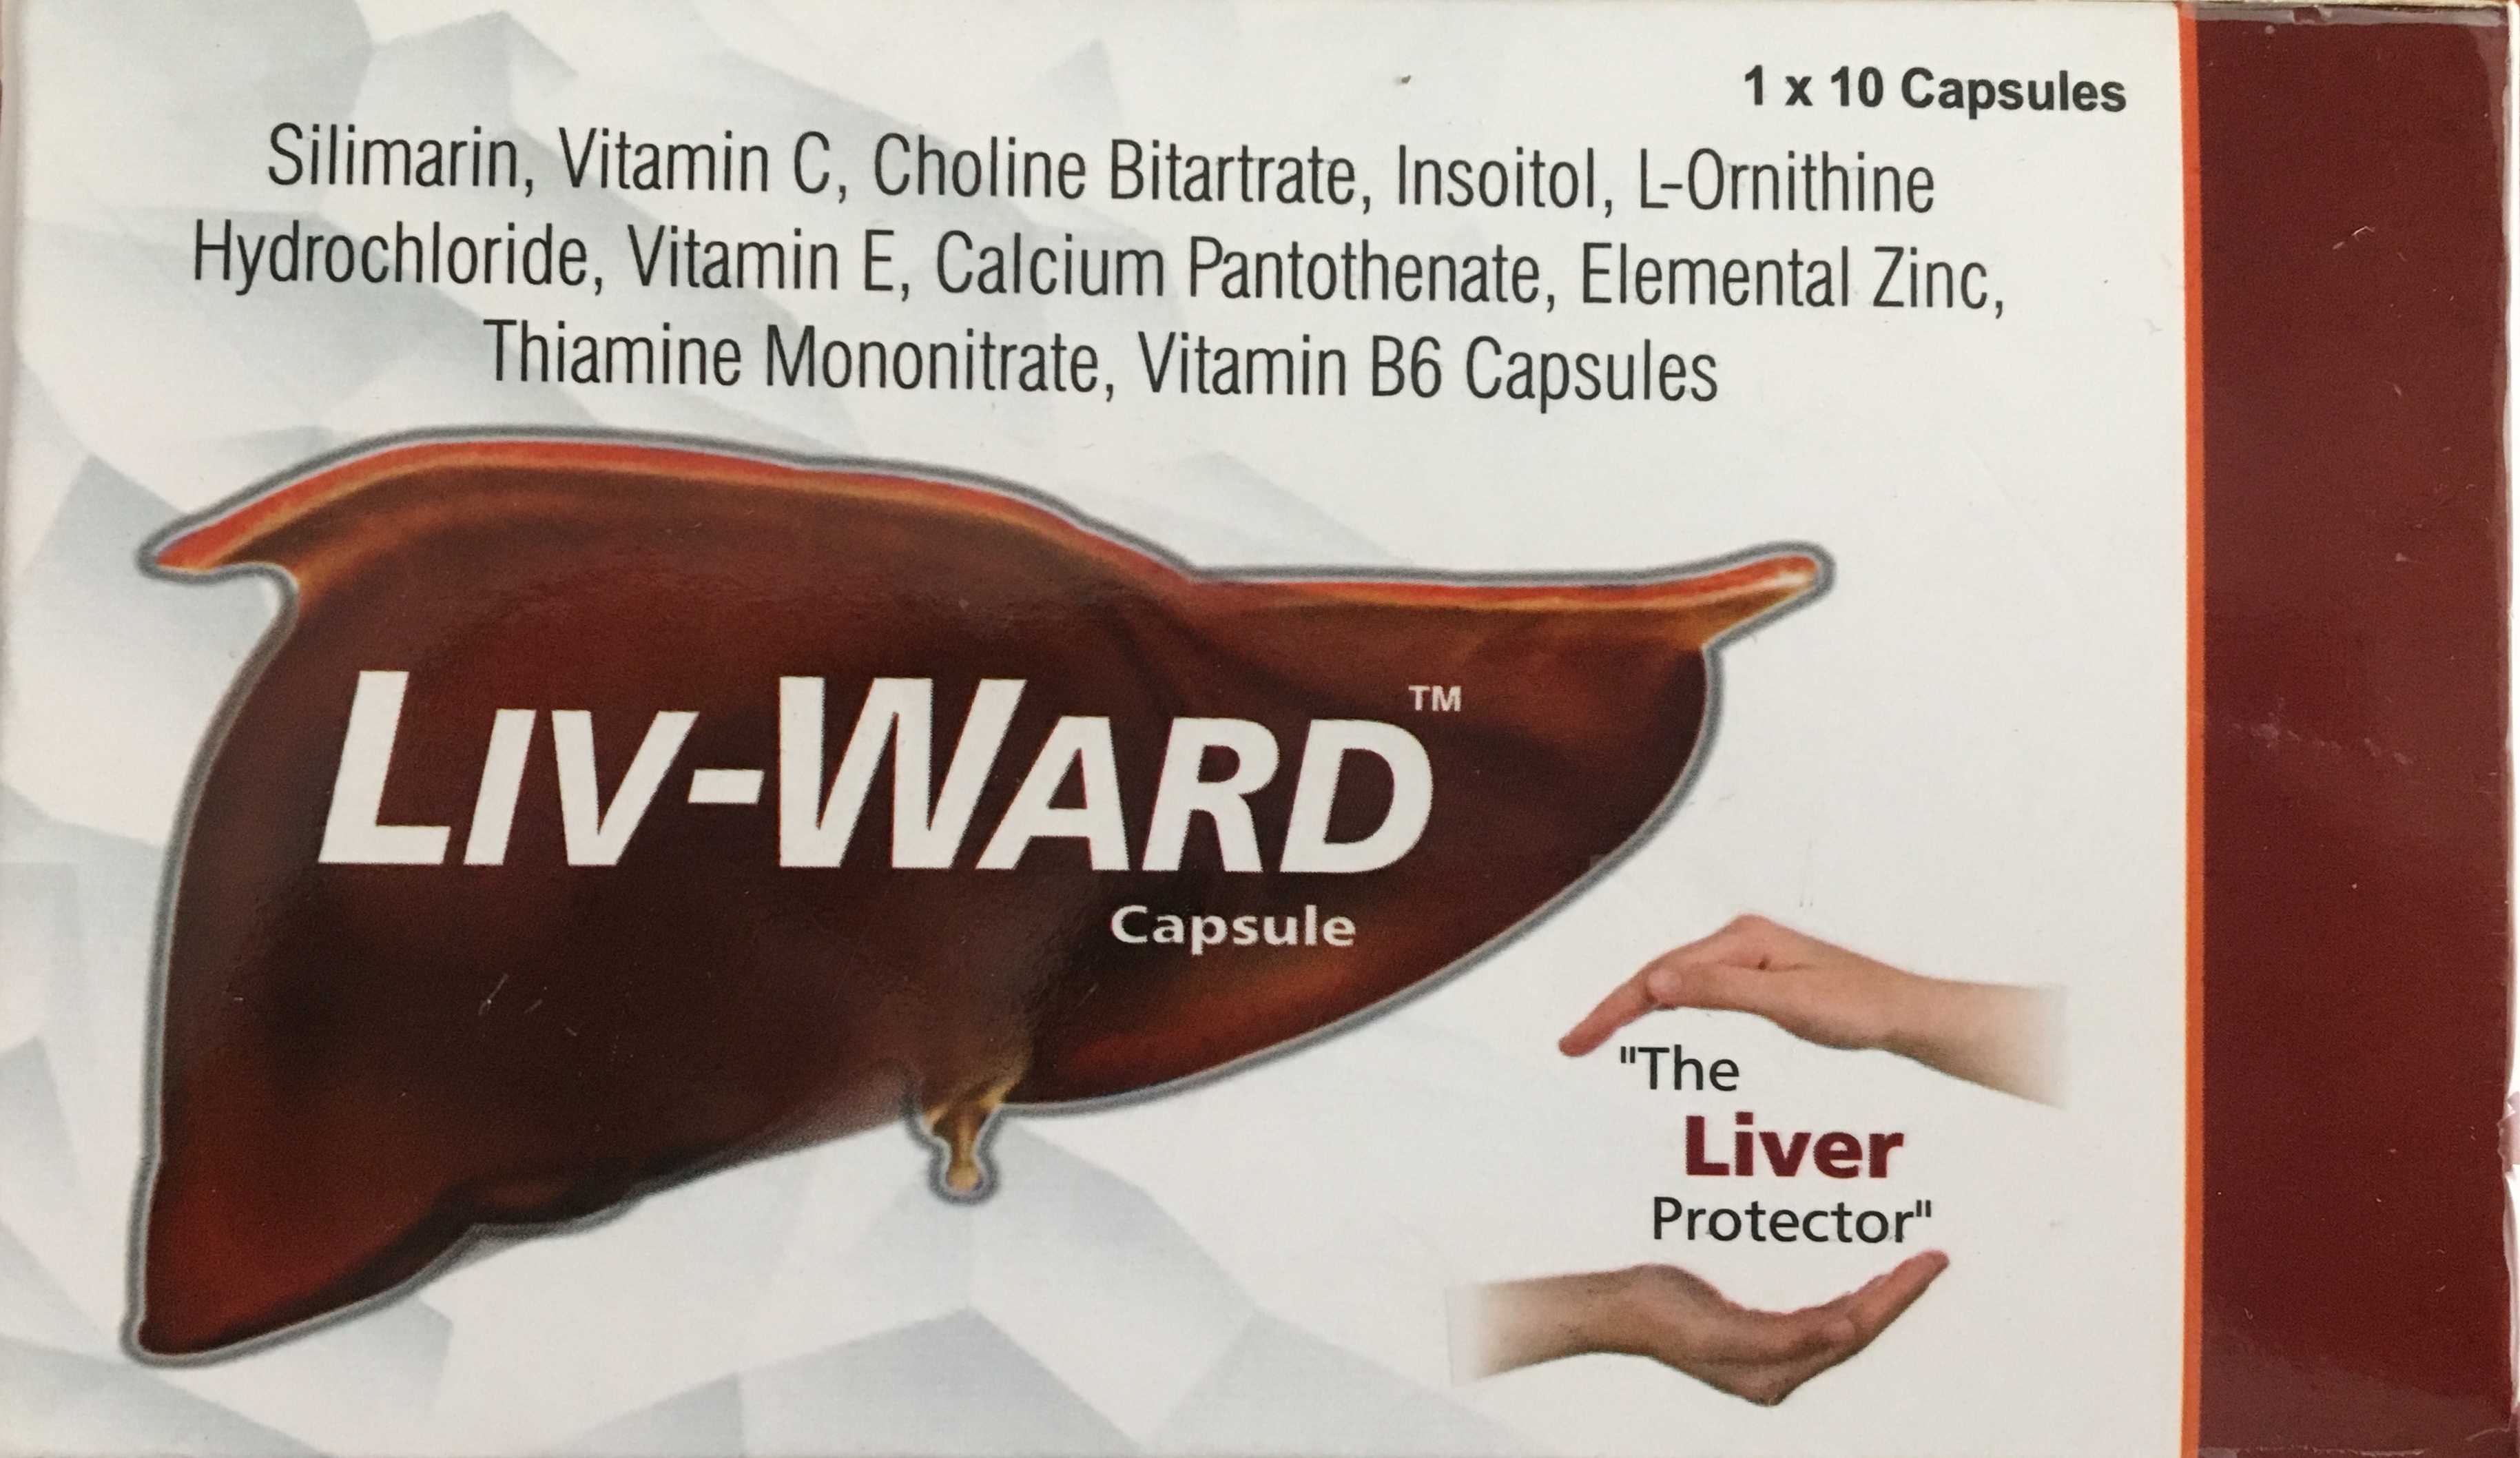 LIV-WARD CAPSULE